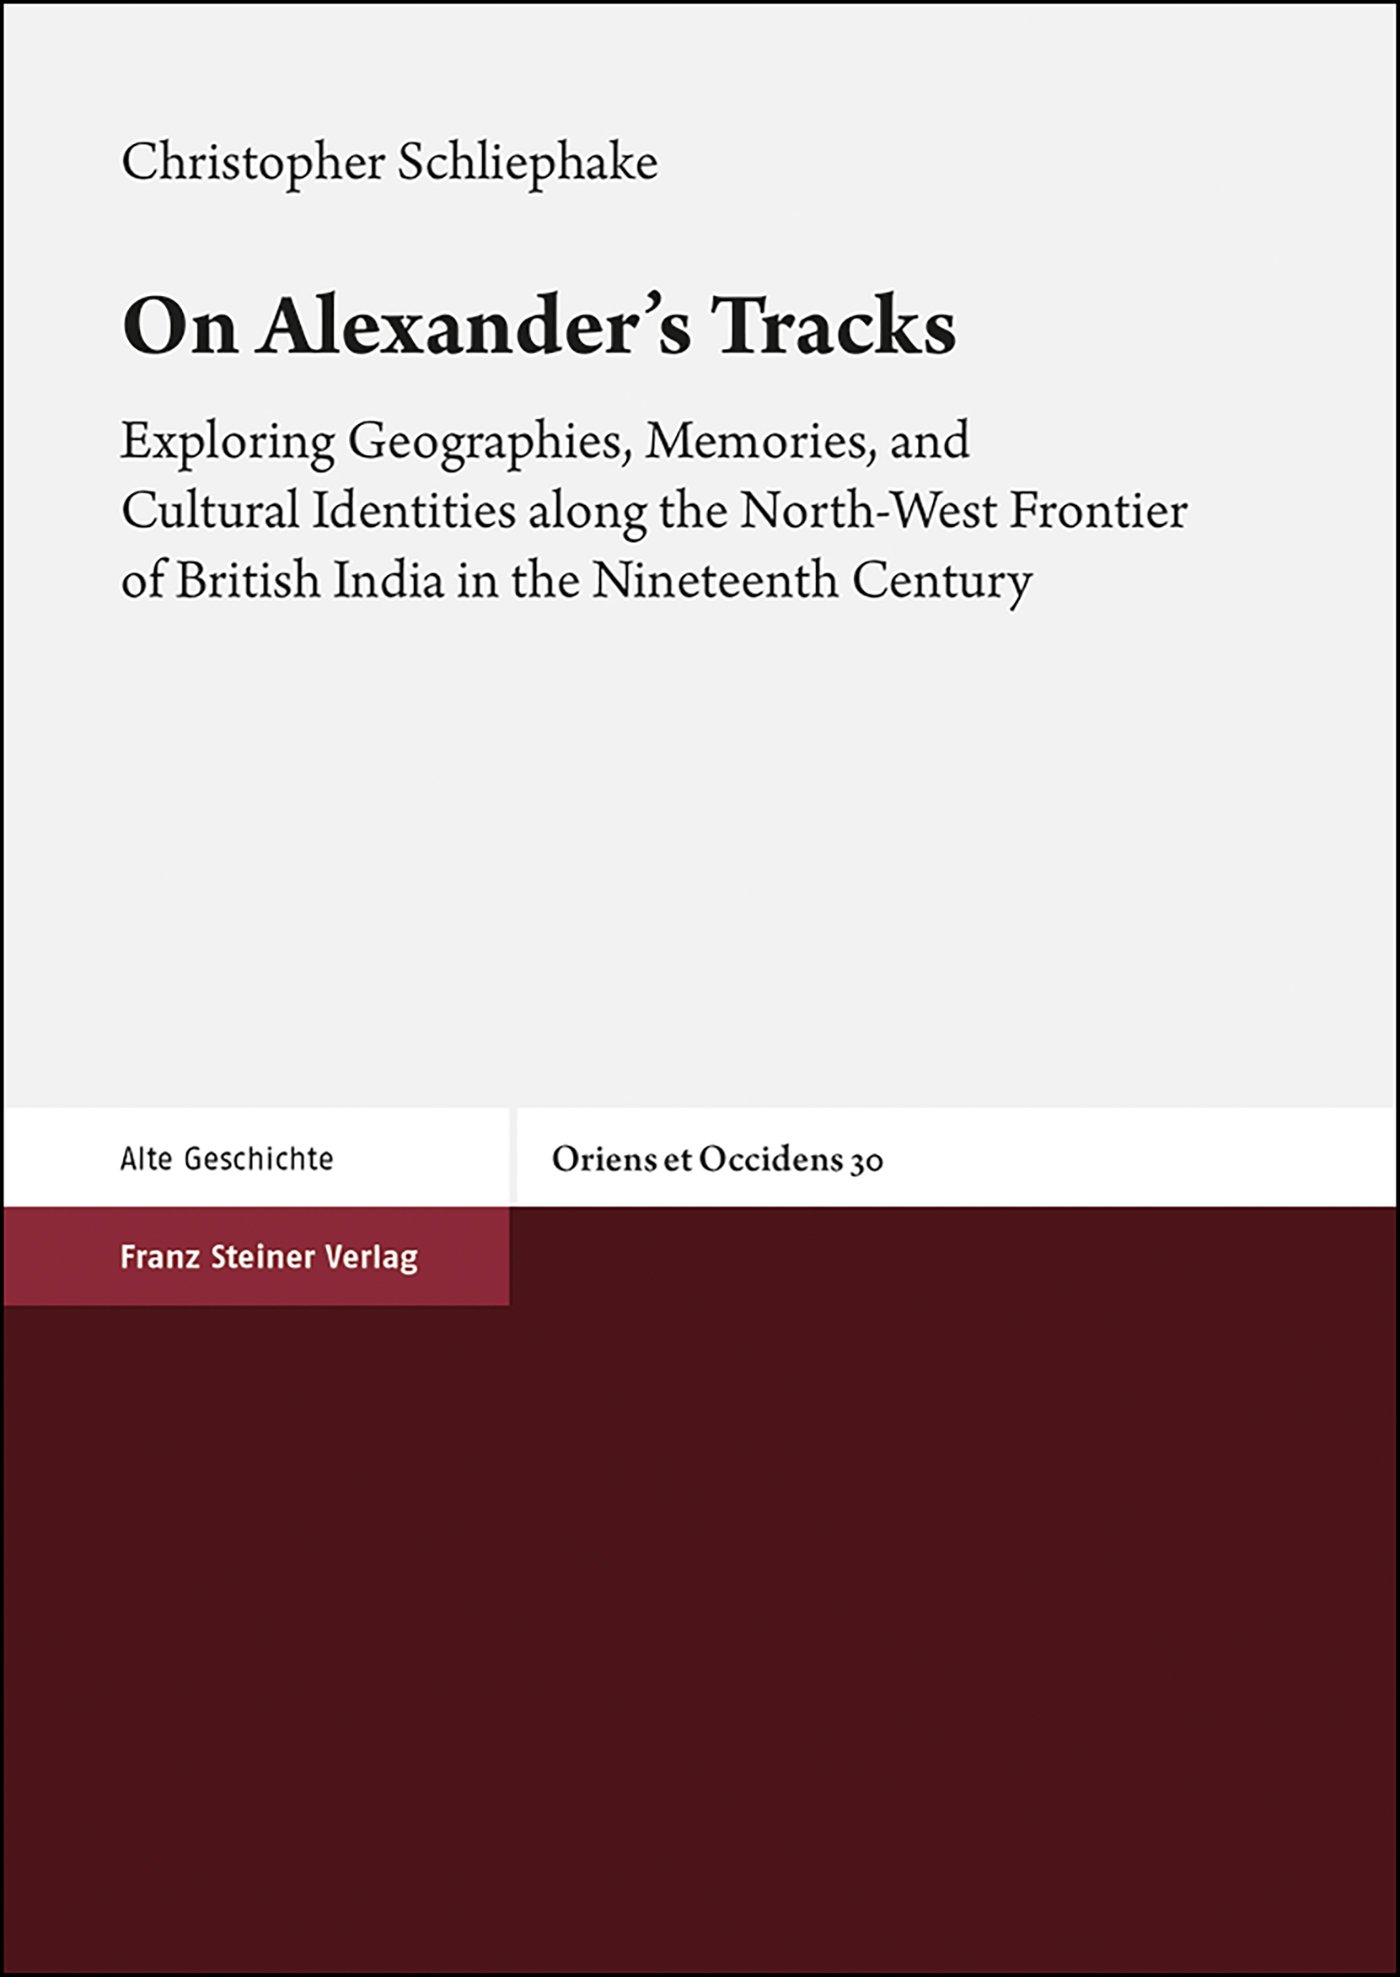 On Alexander’s Tracks